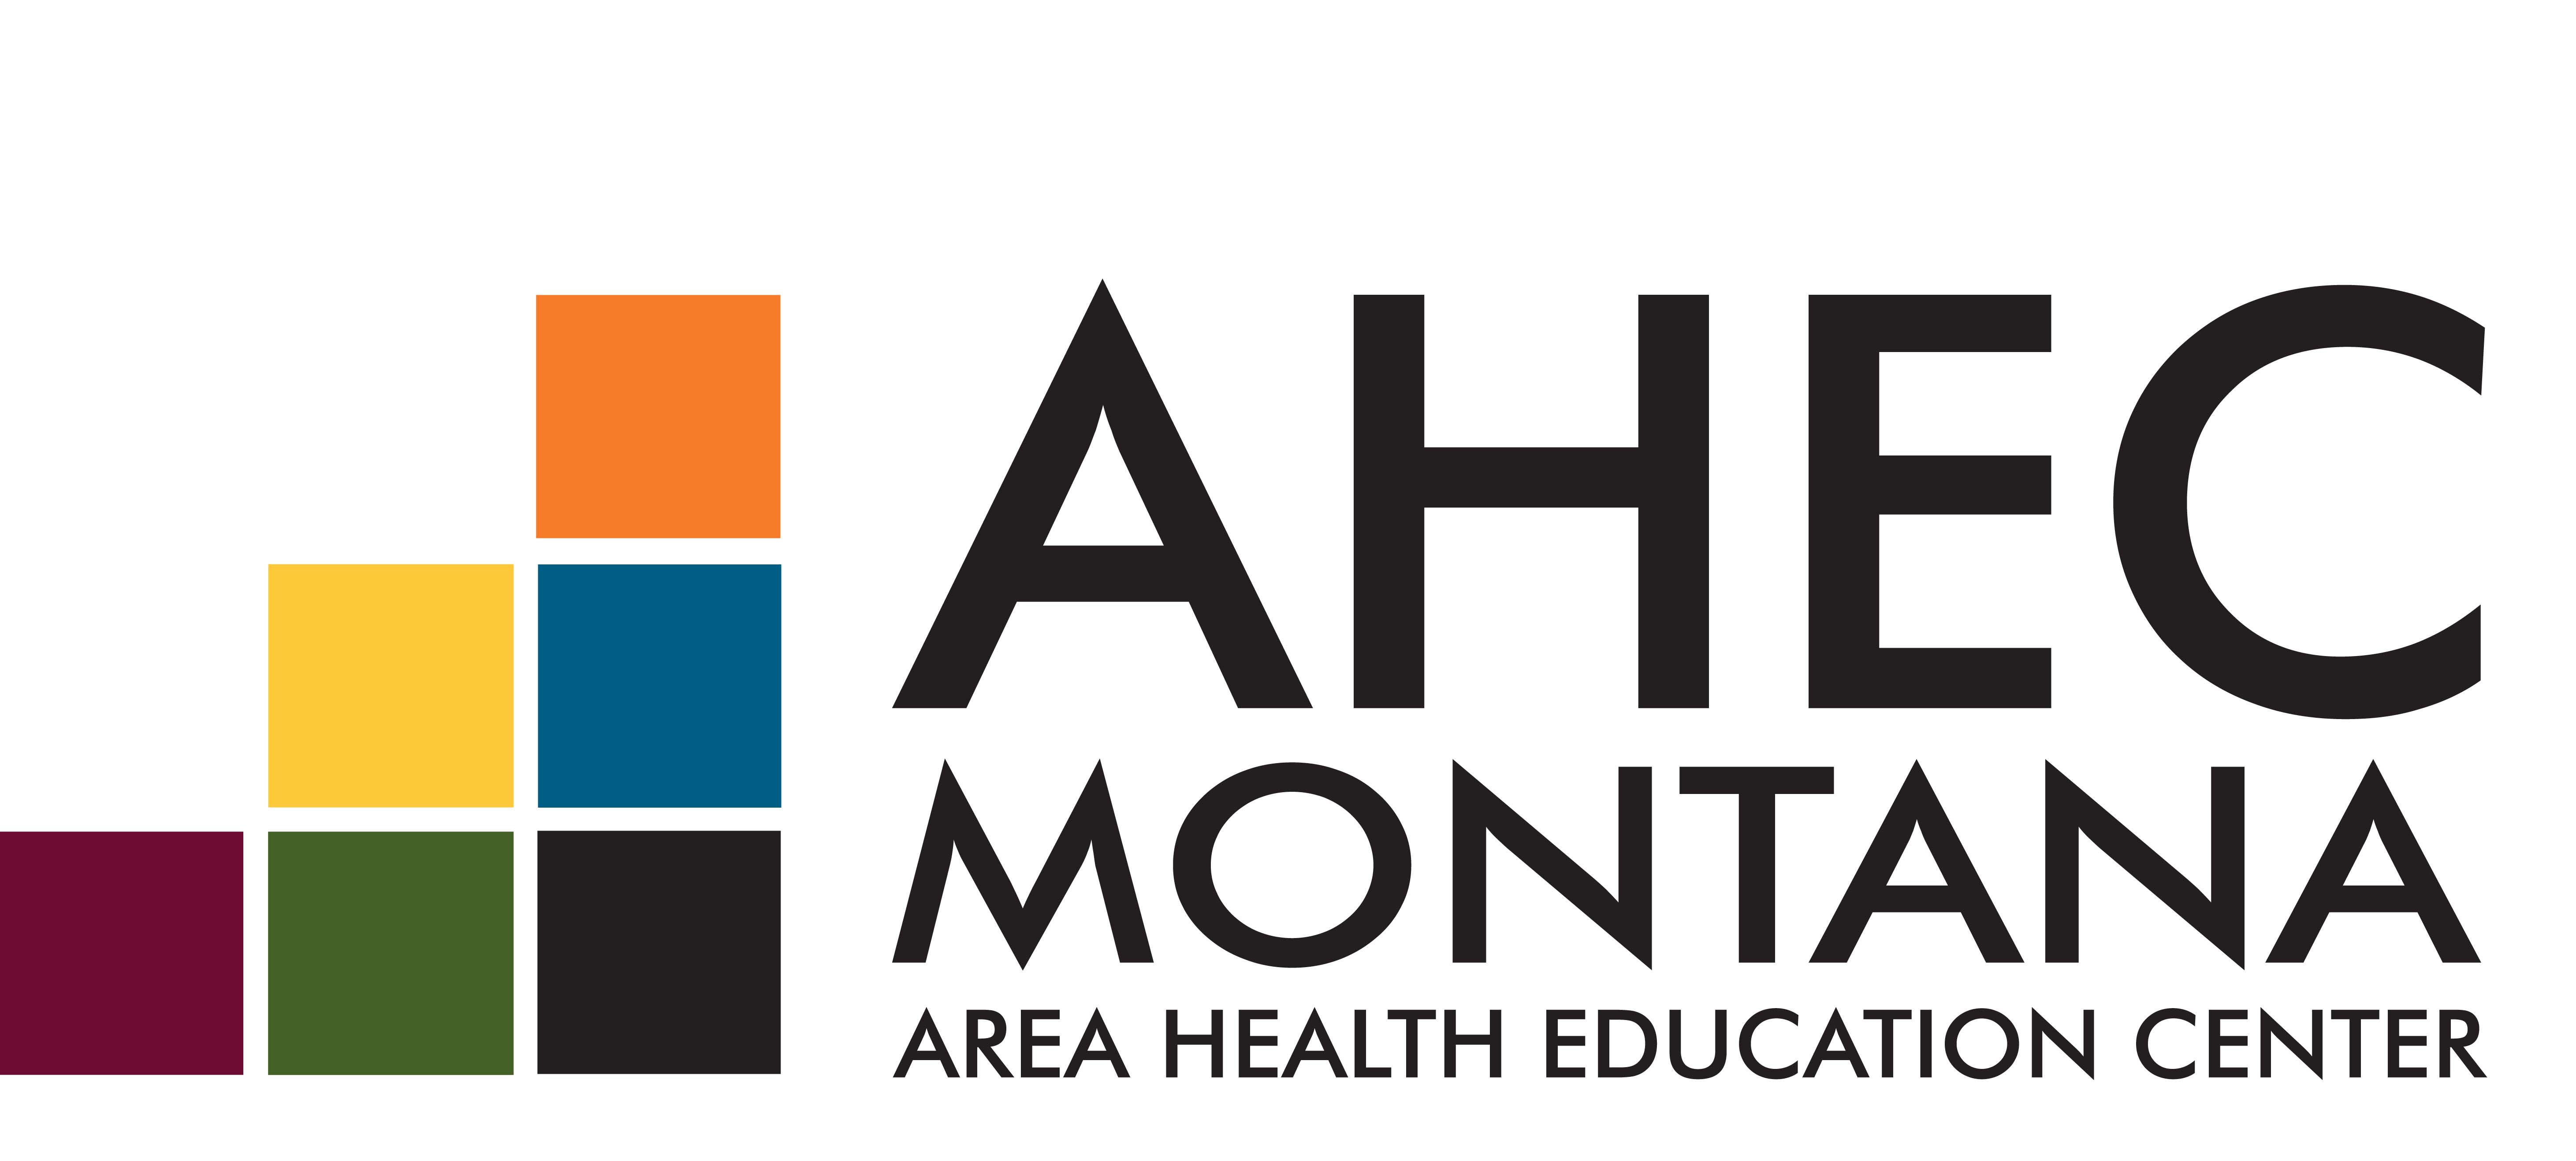 Montana Area Health Education Center Logo